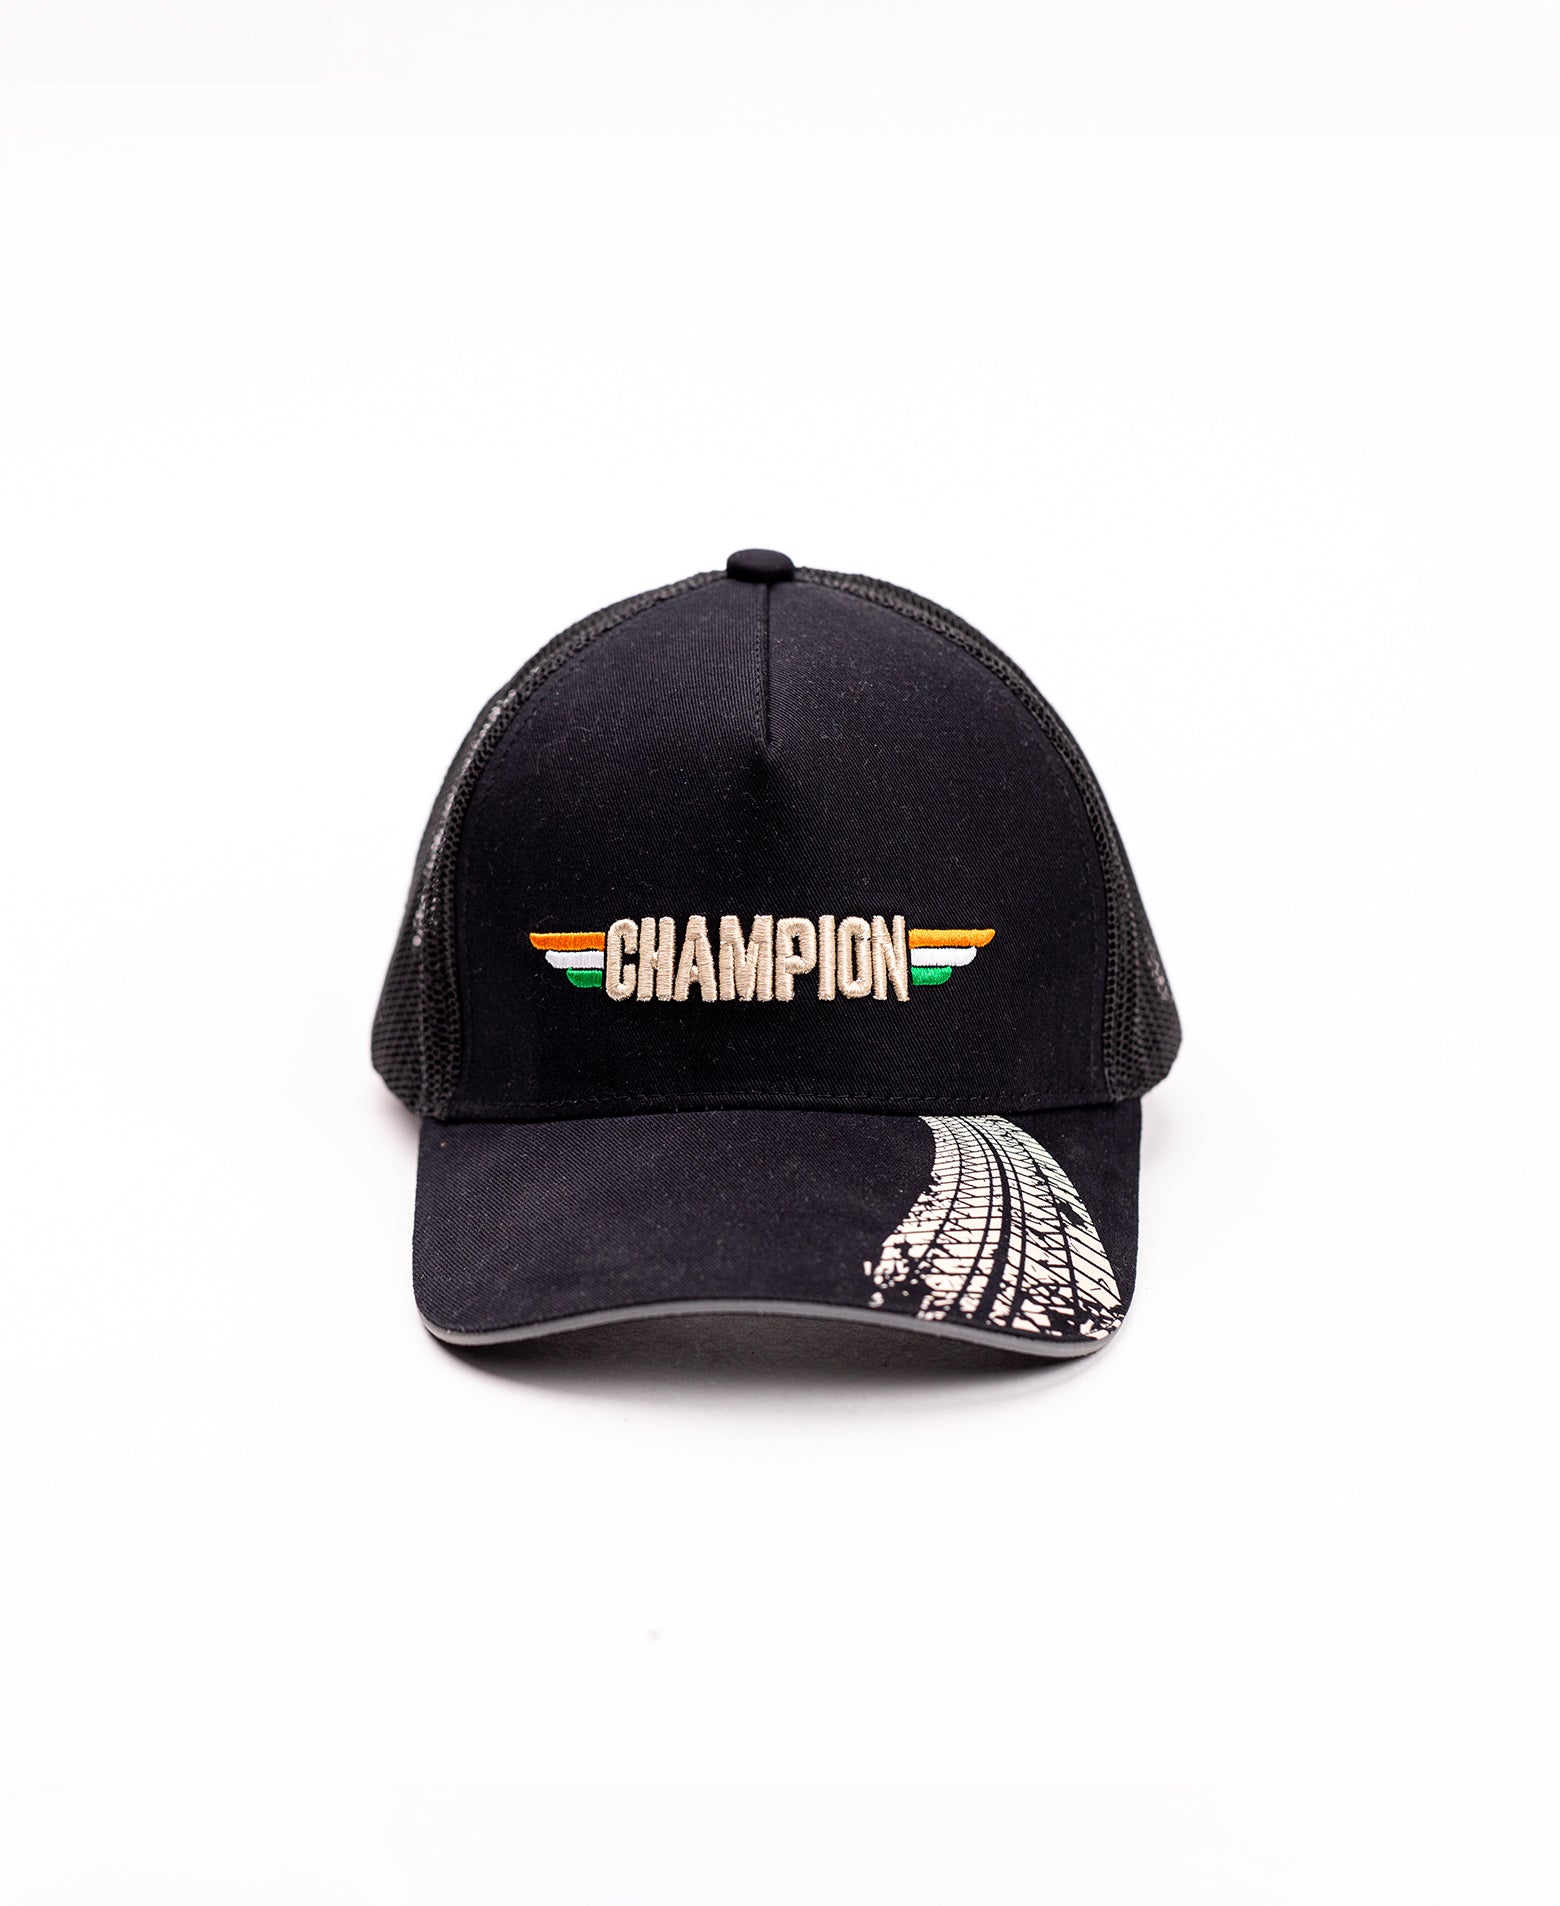 Champion Snapback Cap